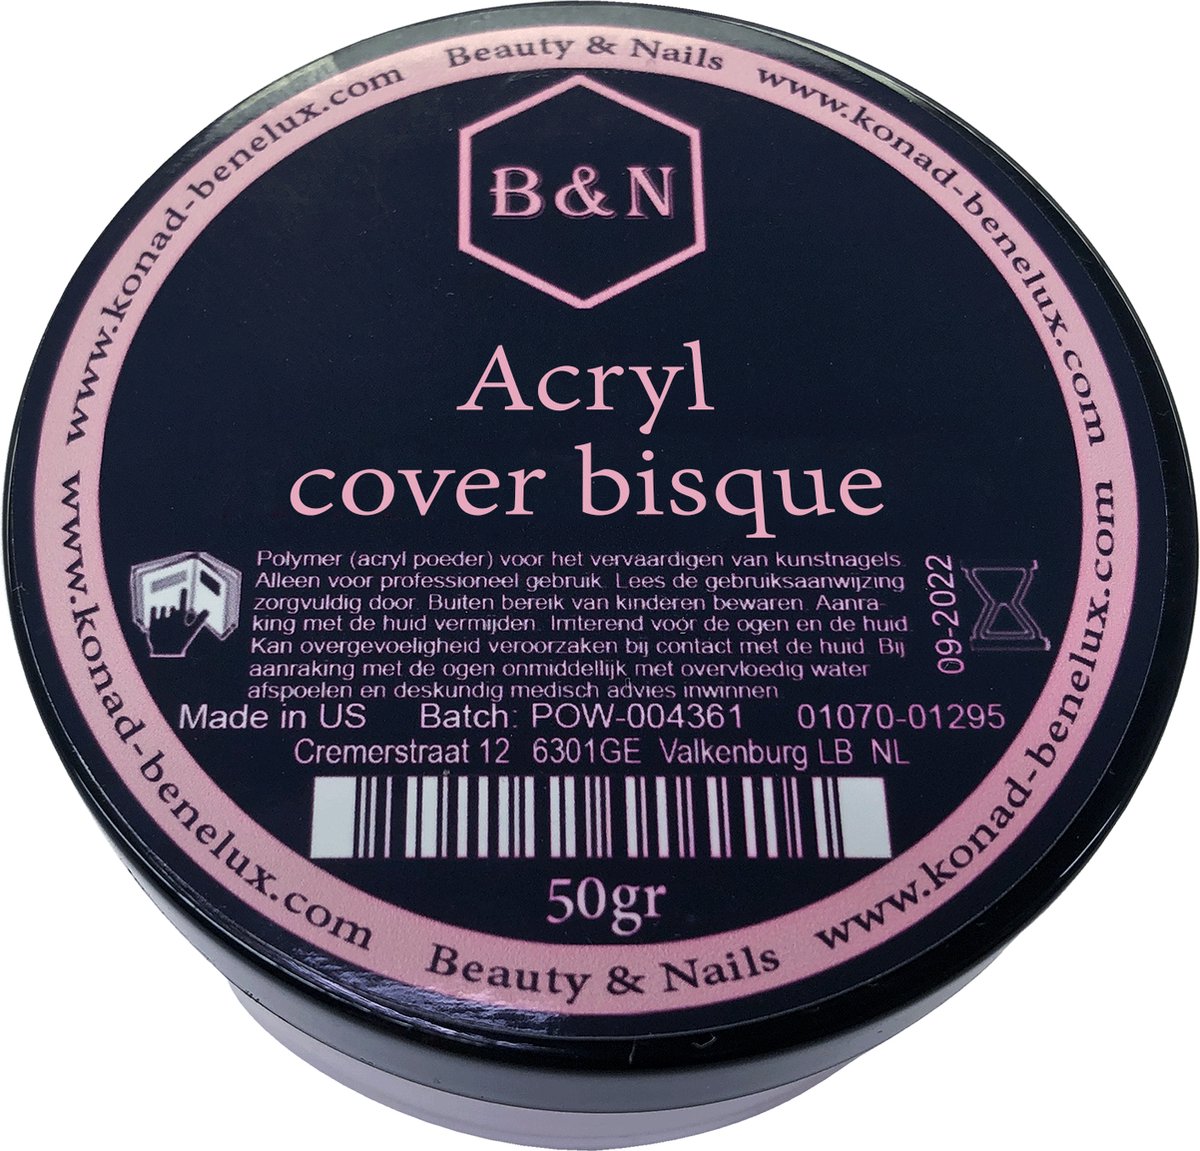 Acryl - cover bisque - 50 gr | B&N - acrylpoeder - VEGAN - acrylpoeder